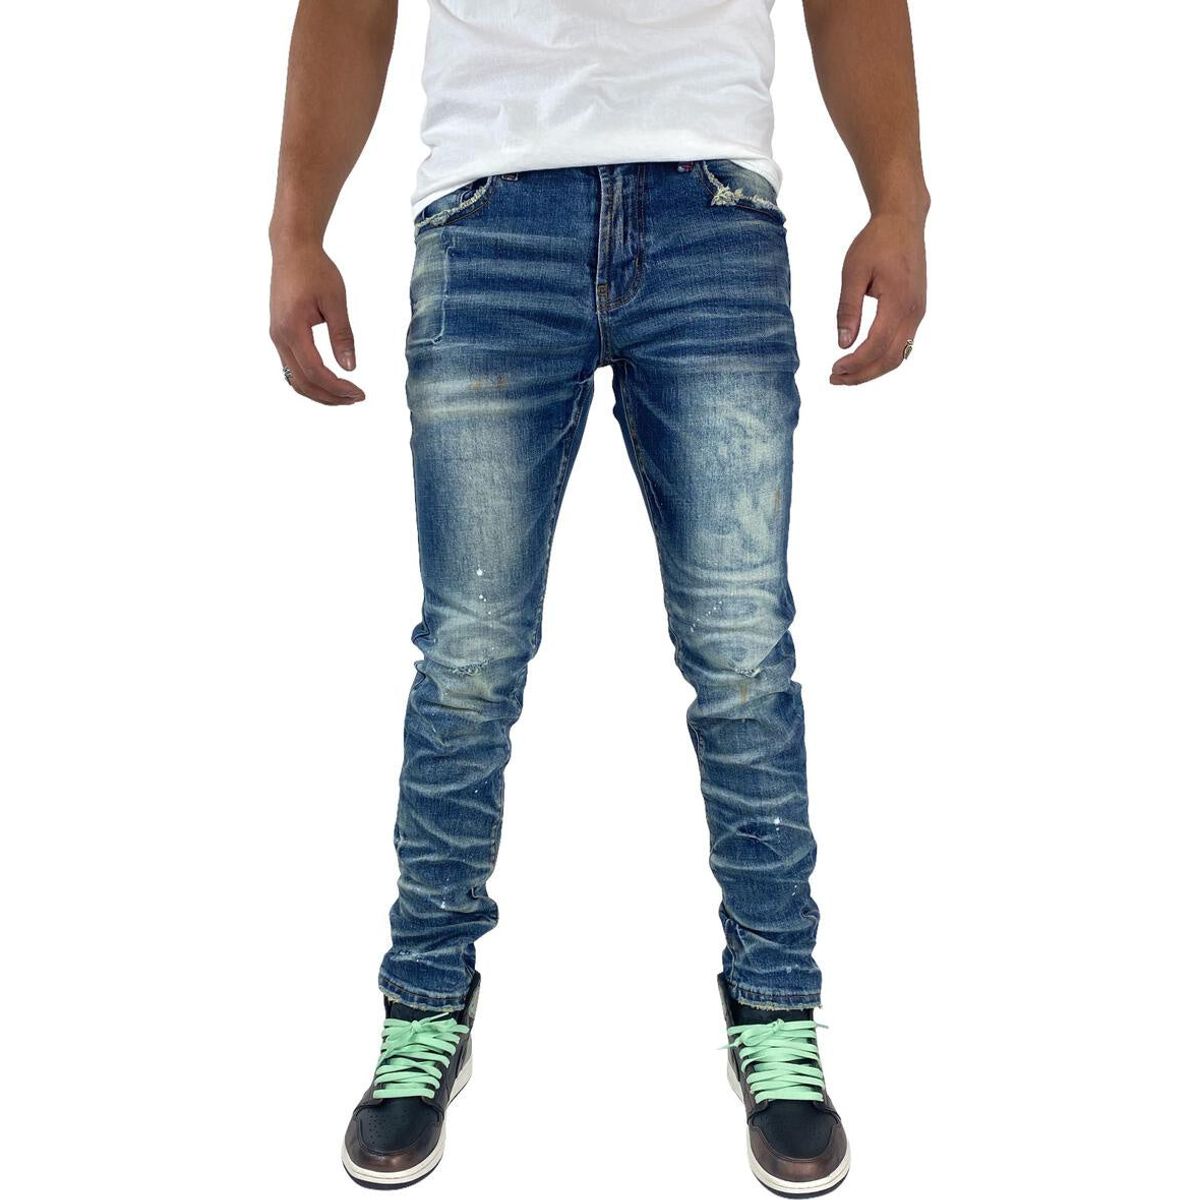 PREME Indigo Blue Wash Denim Jeans (PR-WB-874)